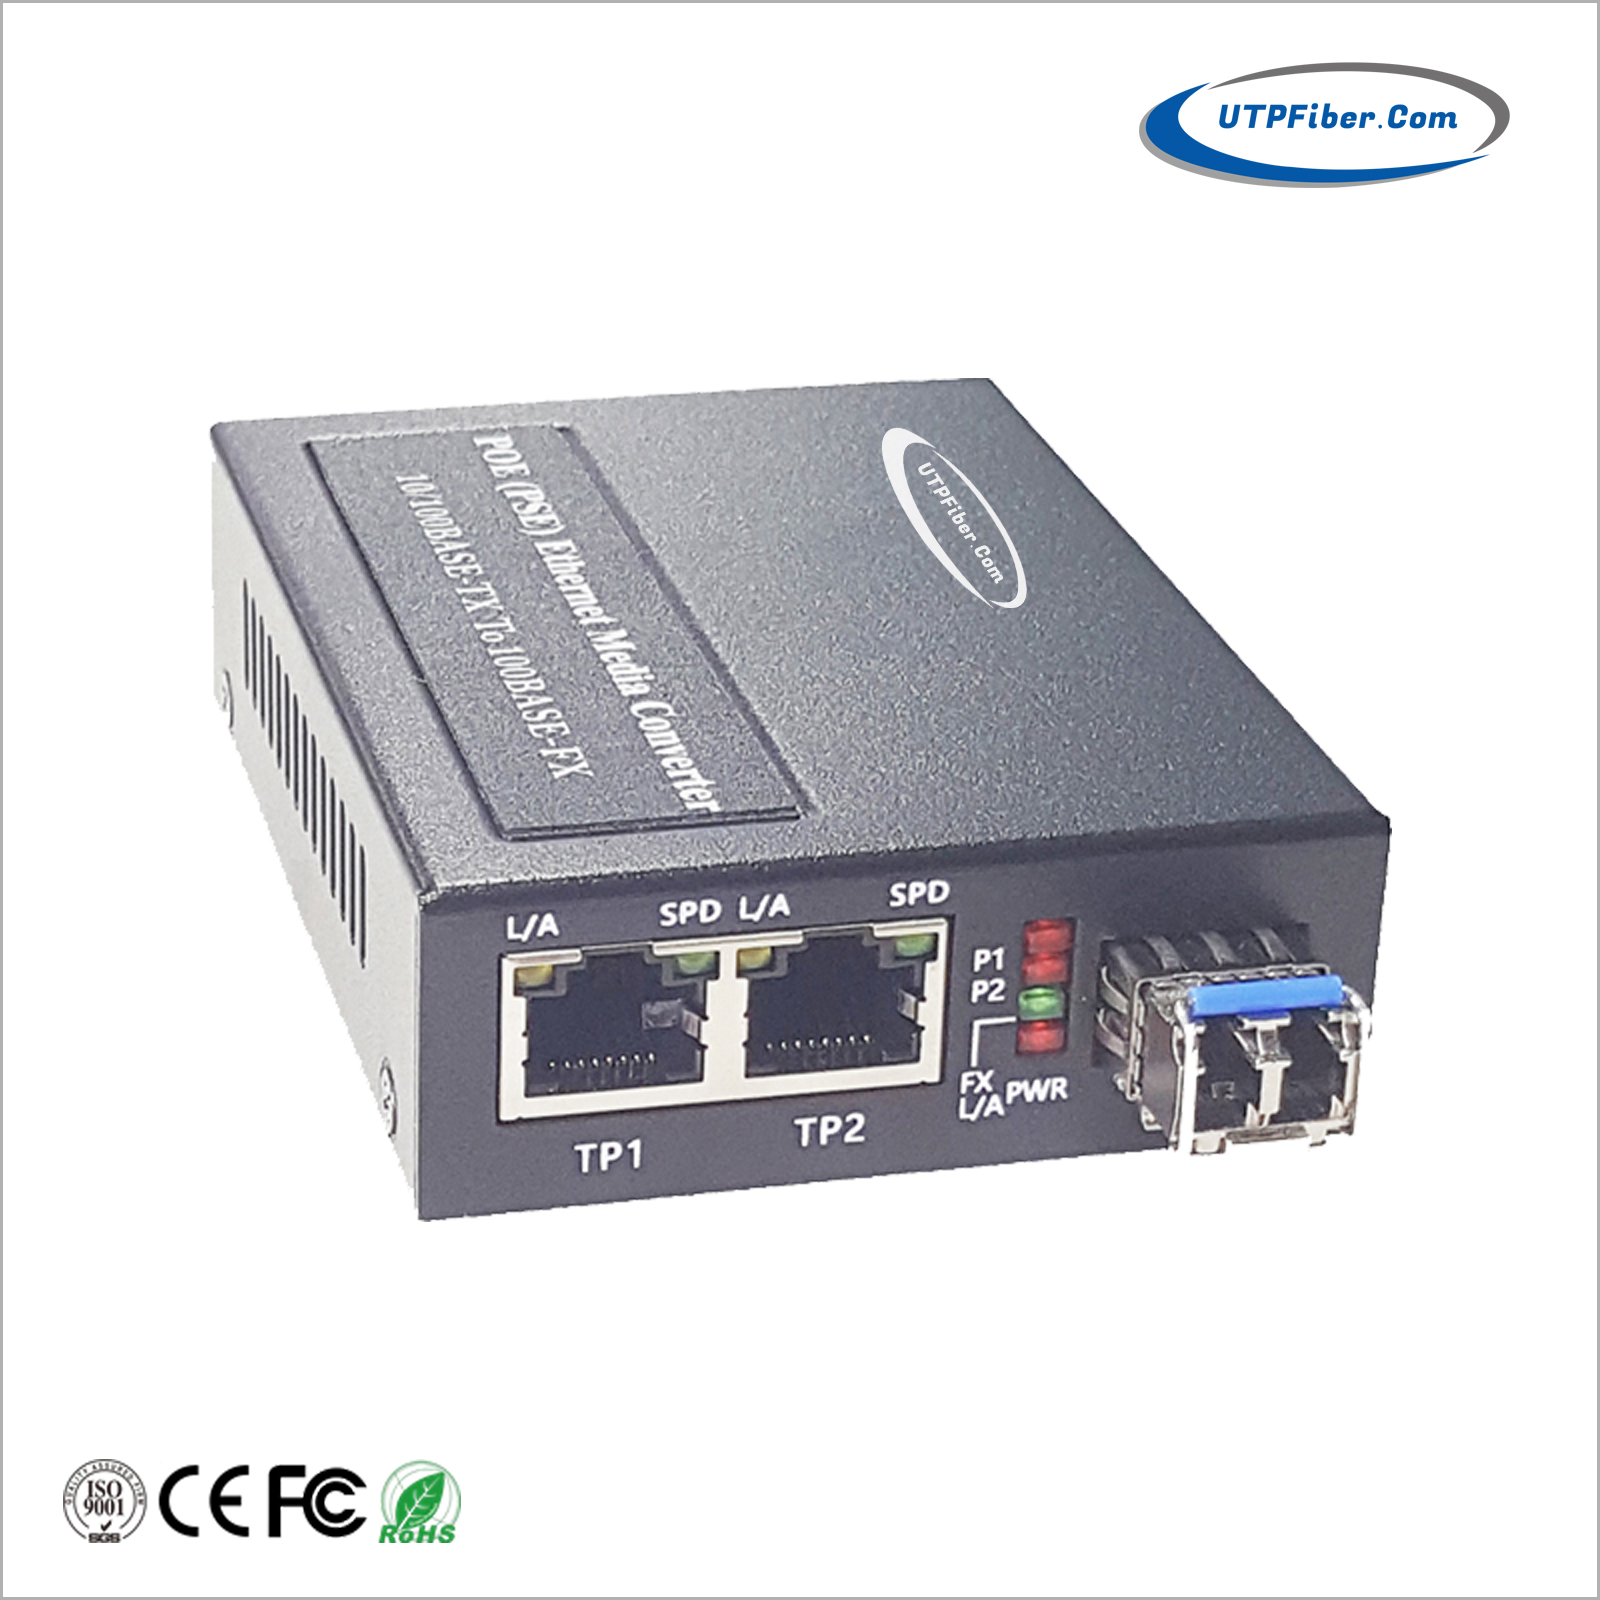 1-port 100Base-FX SFP to 2-port 10/100Base-TX 802.3at PoE+ Media Converter